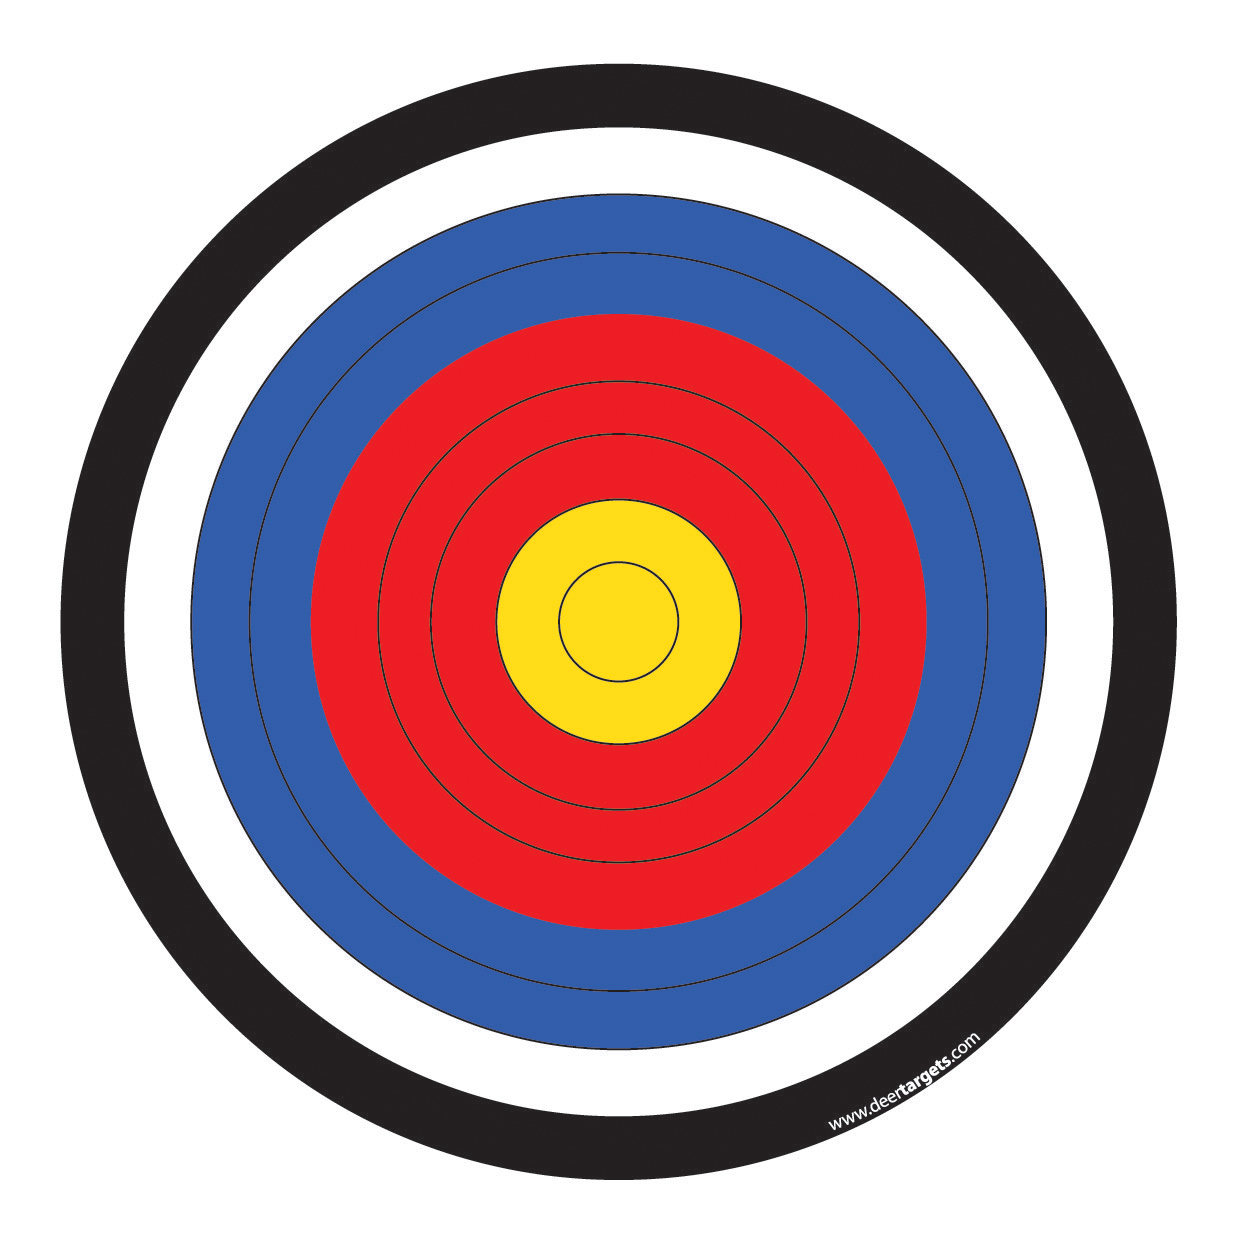 Archery Target Bullseye images & pictures - NearPics